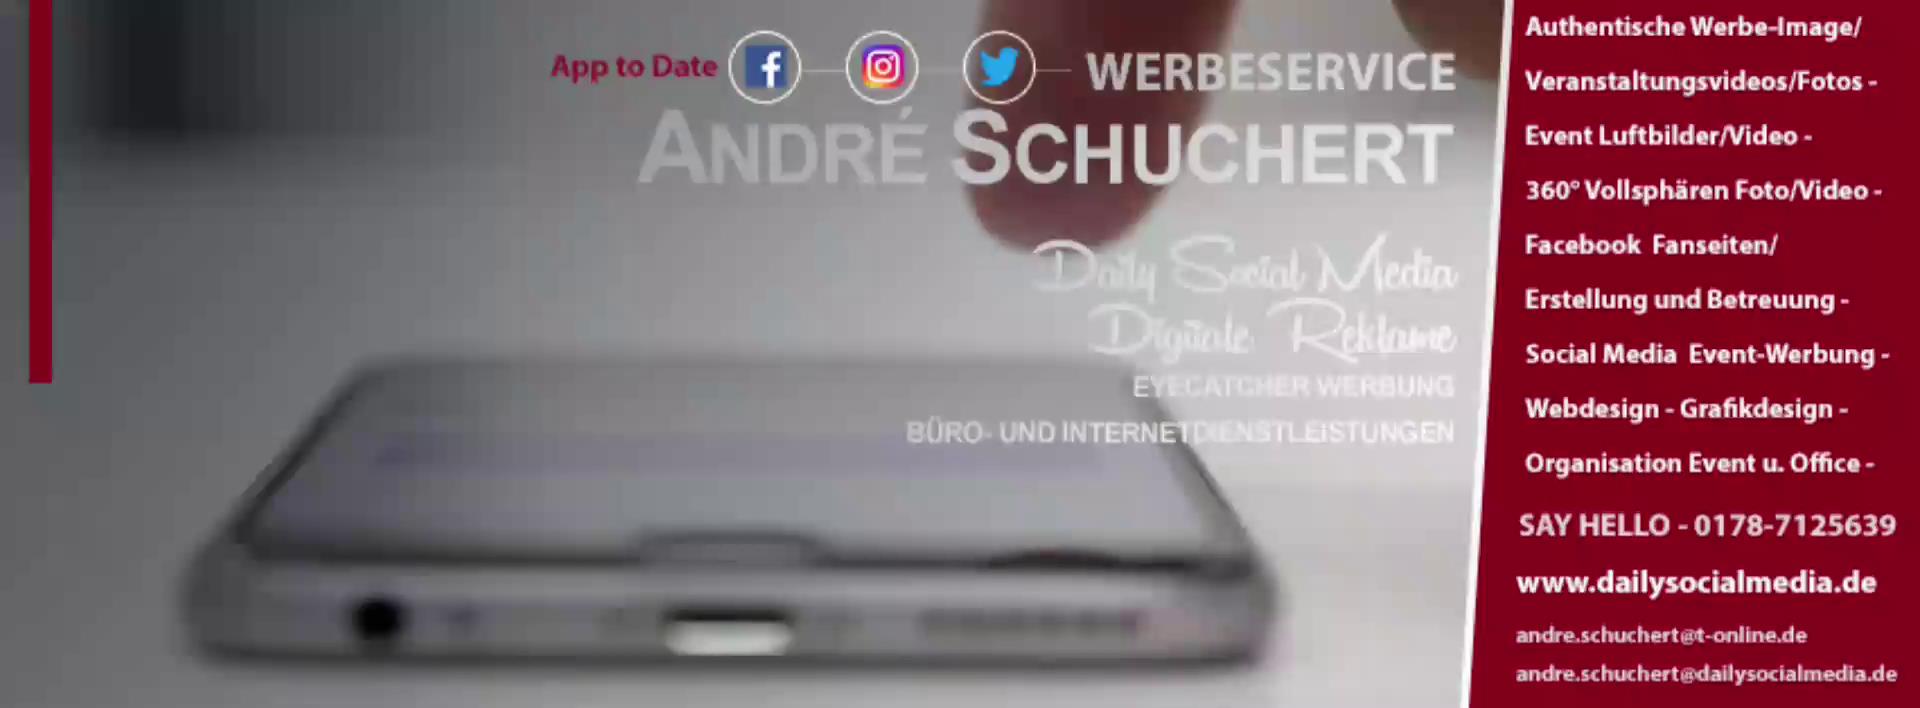 Termine | Werbeservice André Schuchert - Daily Social Media